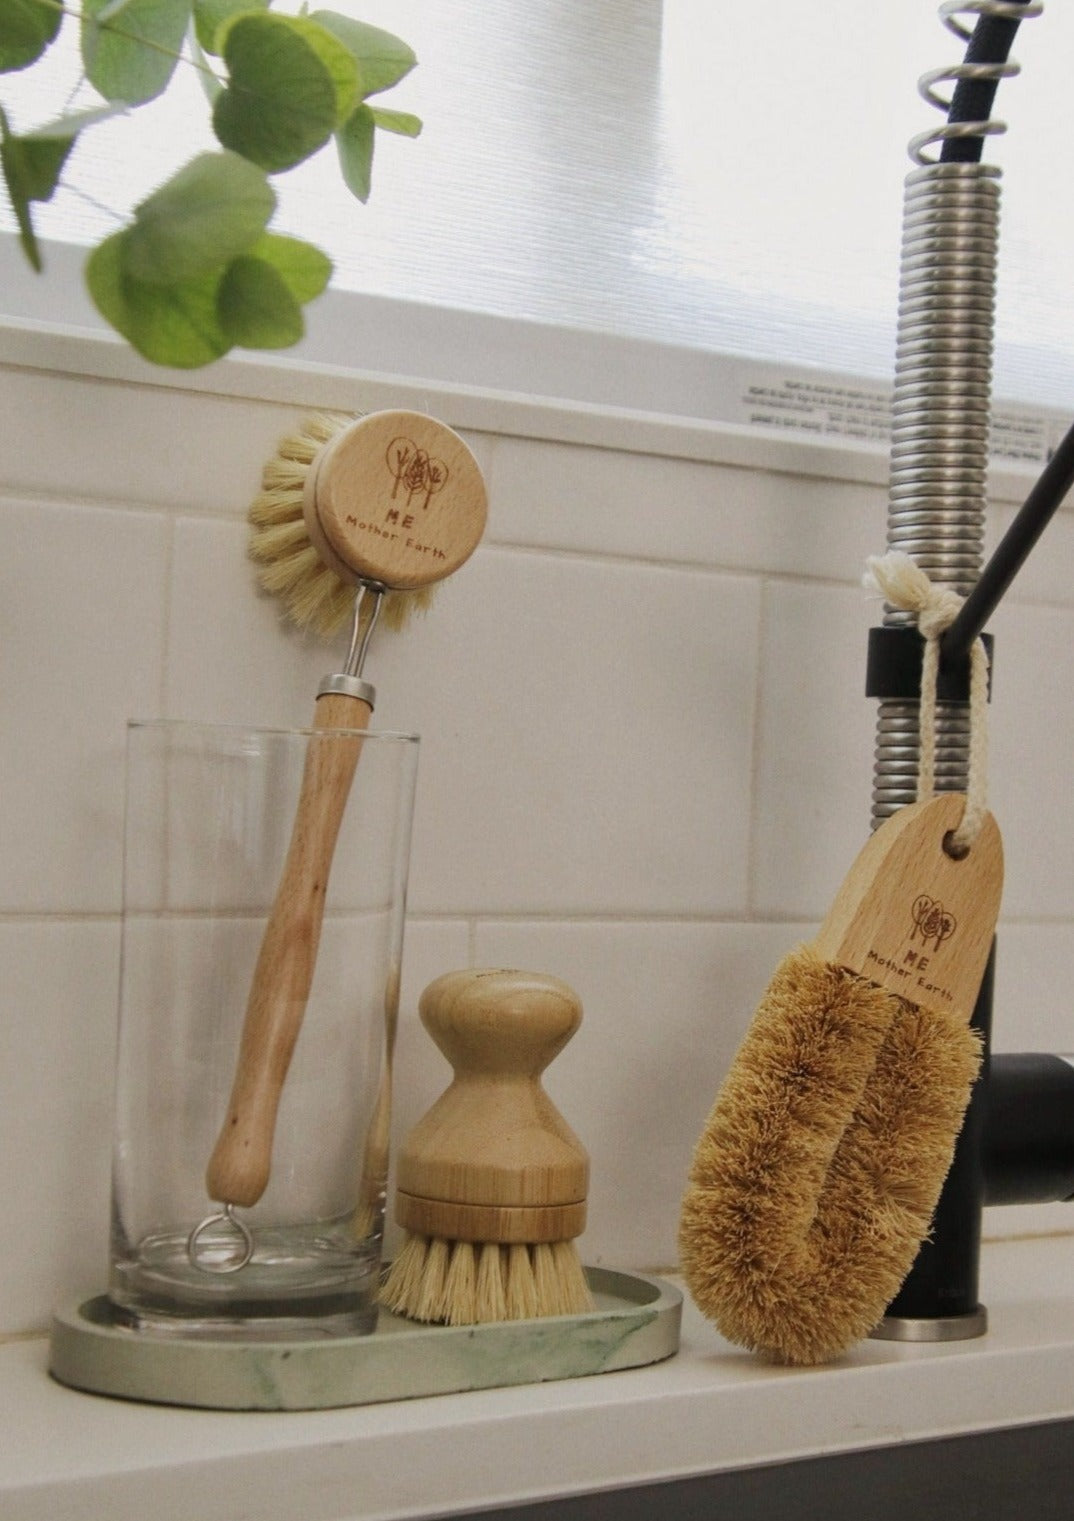 Bamboo Dish Scrub Brushes, Kitchen Wooden Cleaning Scrubbers Set for  Washing Cast Iron Pan/Pot, Natural Sisal Bristles, Set of 3 